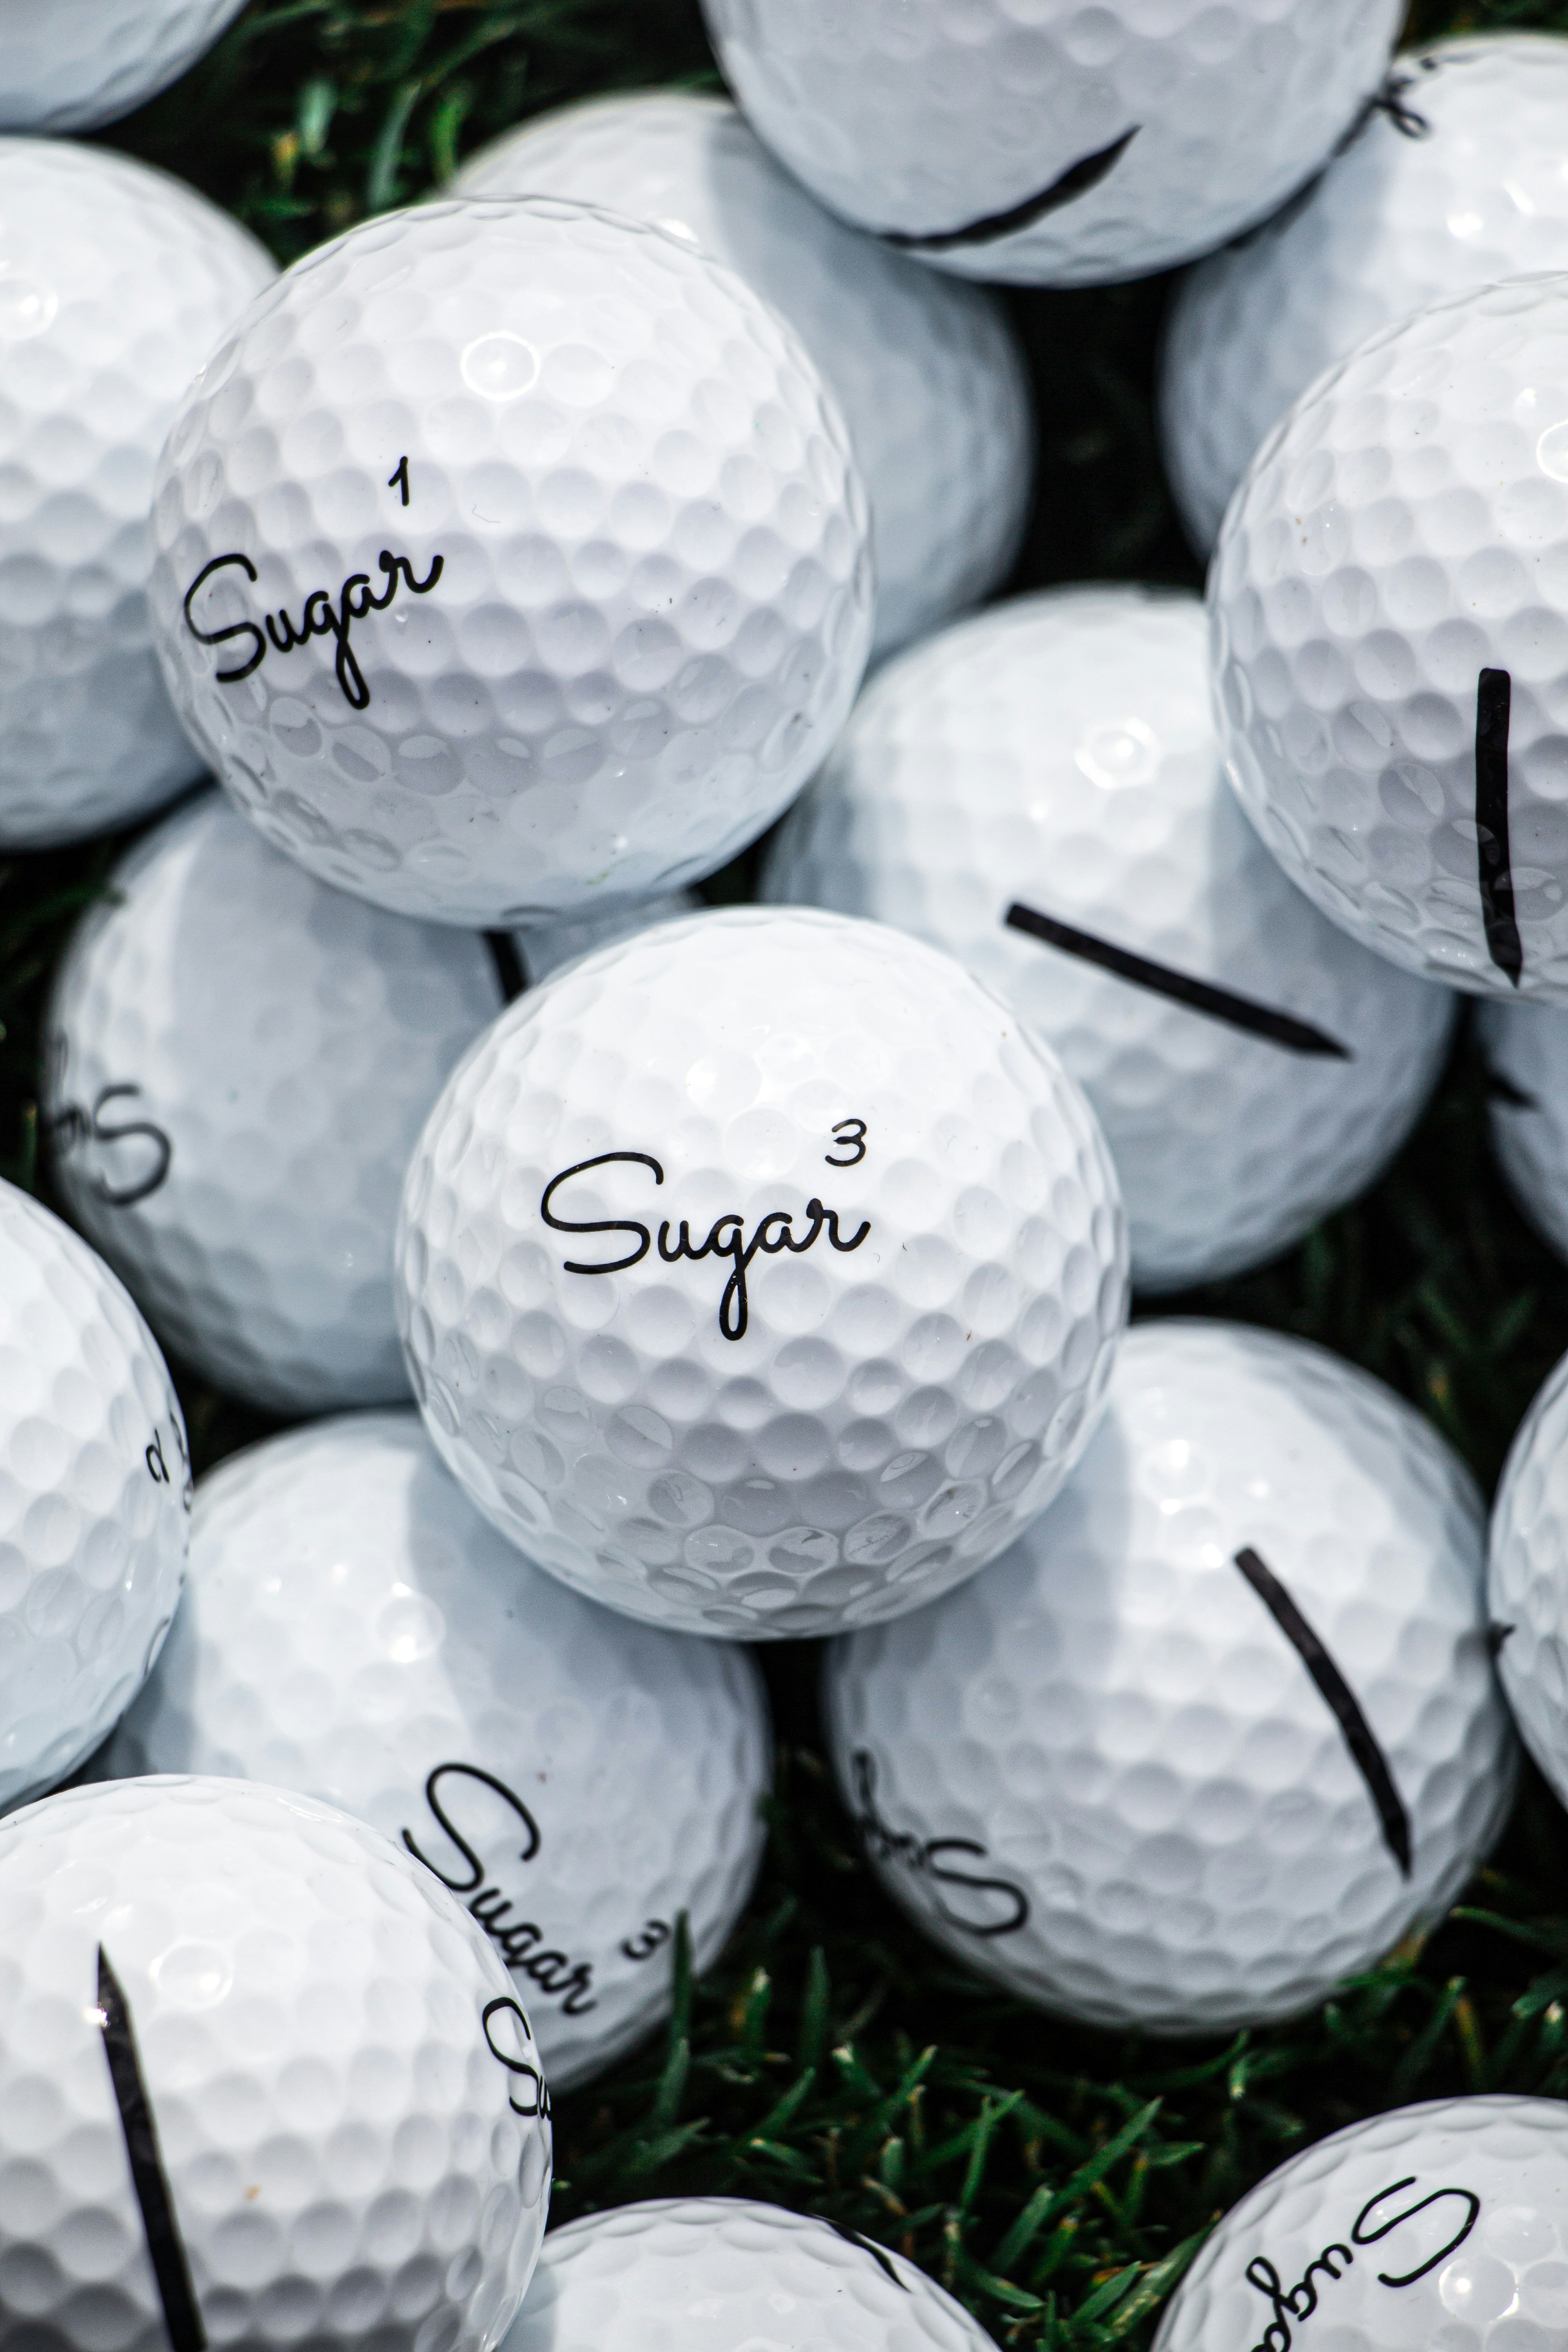 Sugar Golf Balls, https://sugar.golf